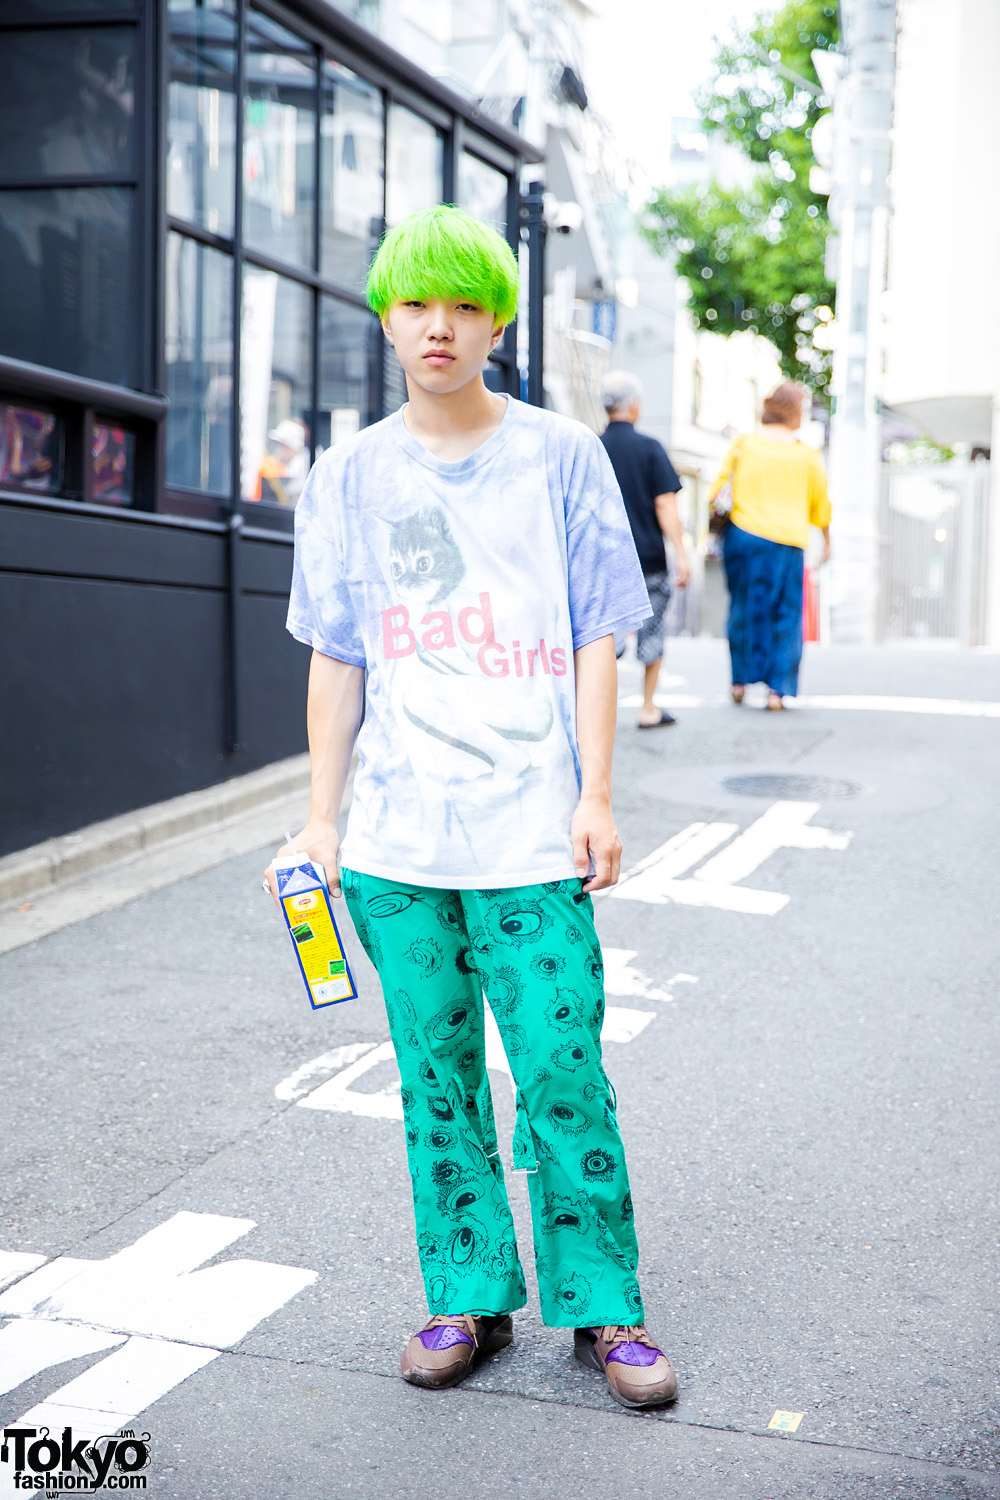 Green-Haired Harajuku Guy w/ Kinji Graphic Top, Hiro Green Printed Pants & Nike Sneakers